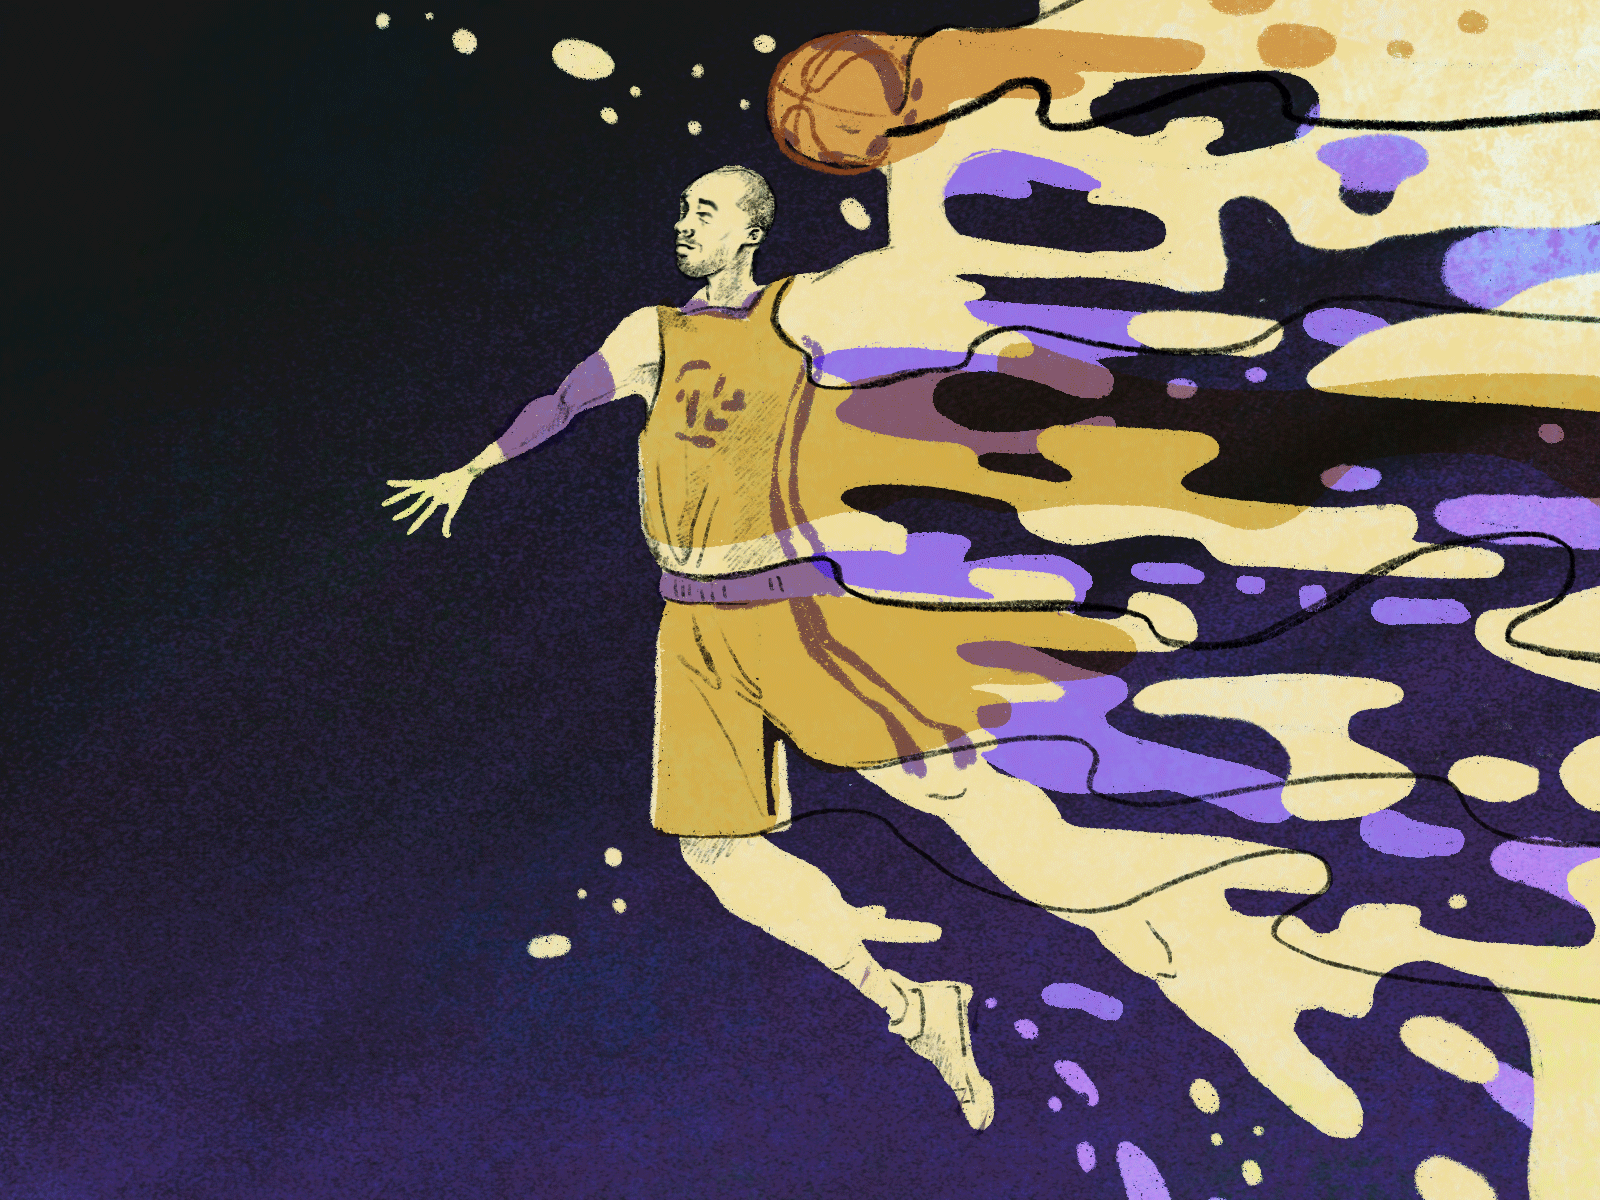 Tribute to Kobe Bryan animated gif animation basketball editorial editorial illustration gif animation illustration kobebryant lakers motiongraphics nba procreate procreate animation ripkobe